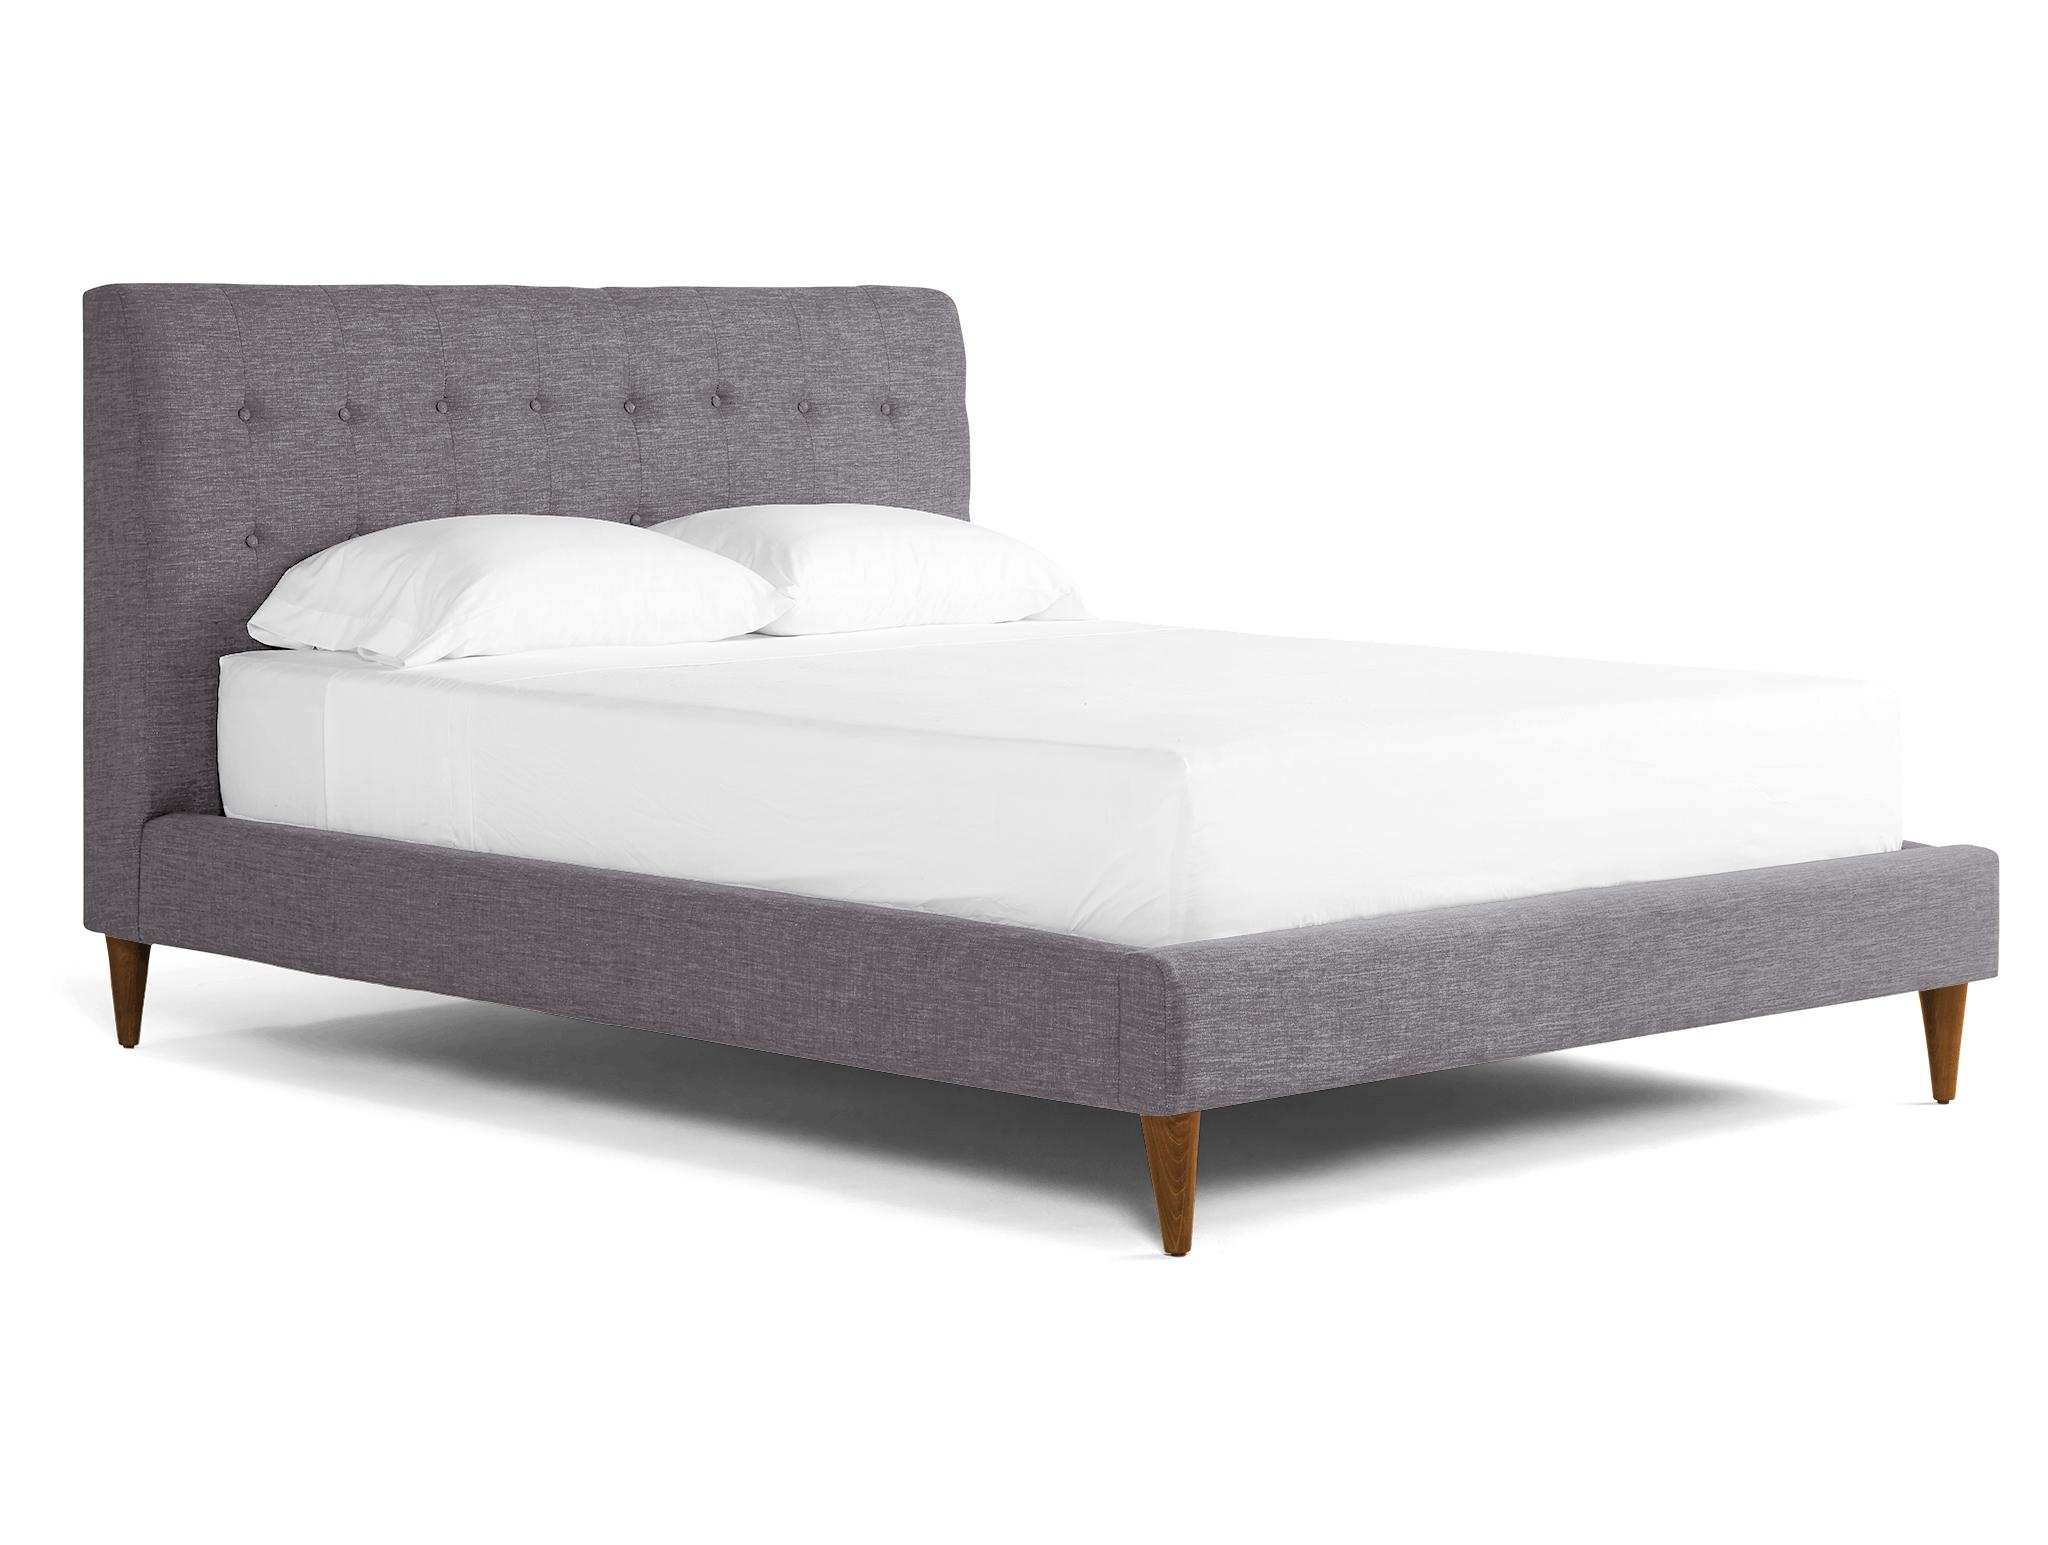 Gray Eliot Mid Century Modern Bed - Essence Ash - Mocha - Queen - Image 1